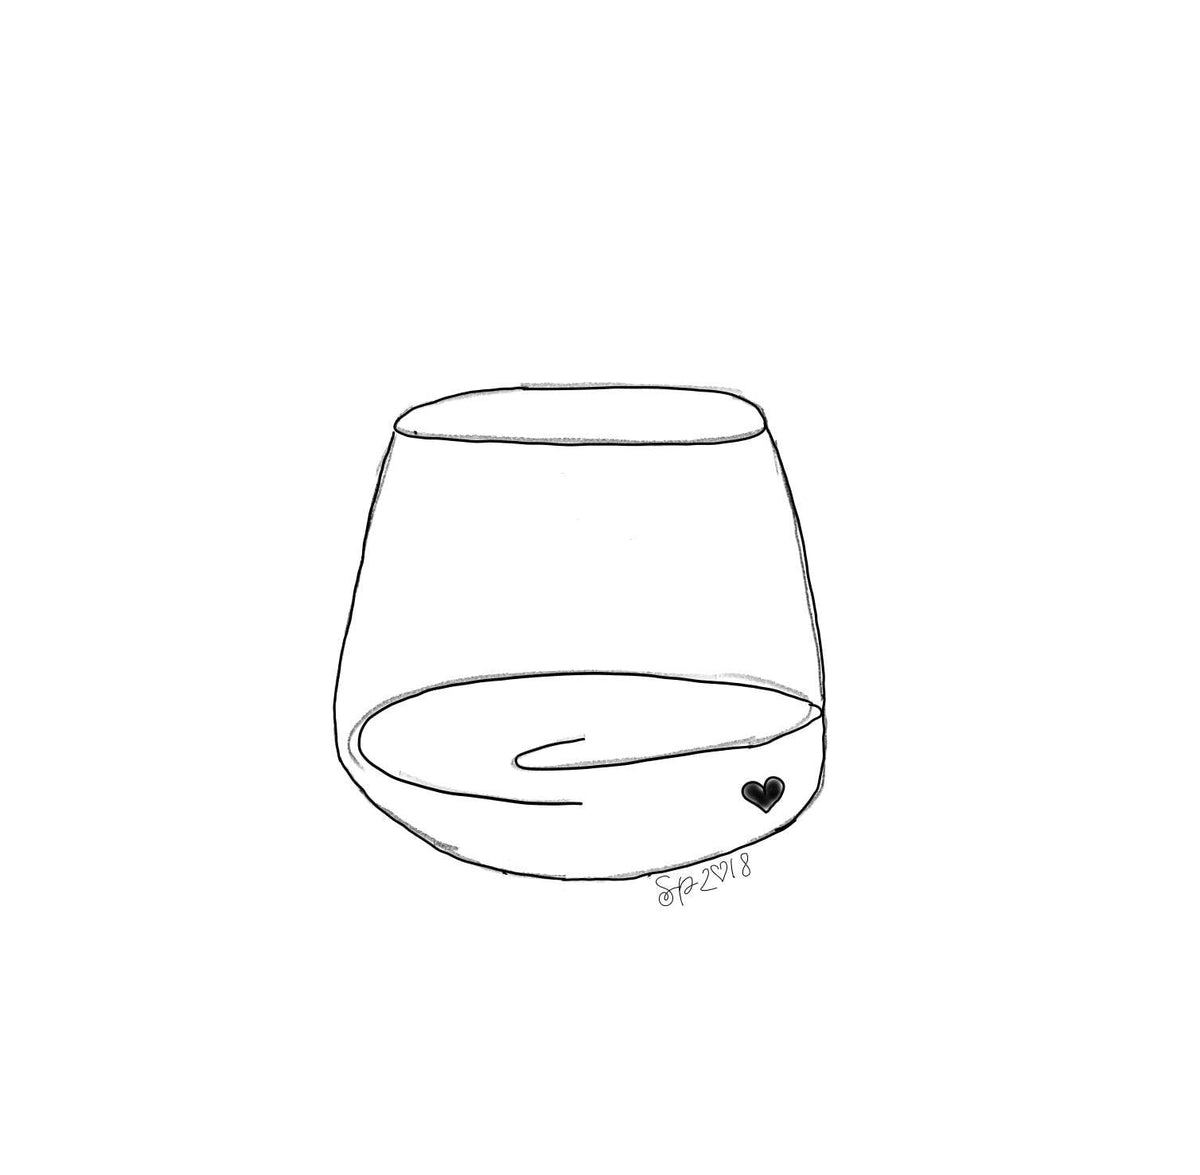 Stemless Wine Glass 2 Cookie Cutter - Sweetleigh 